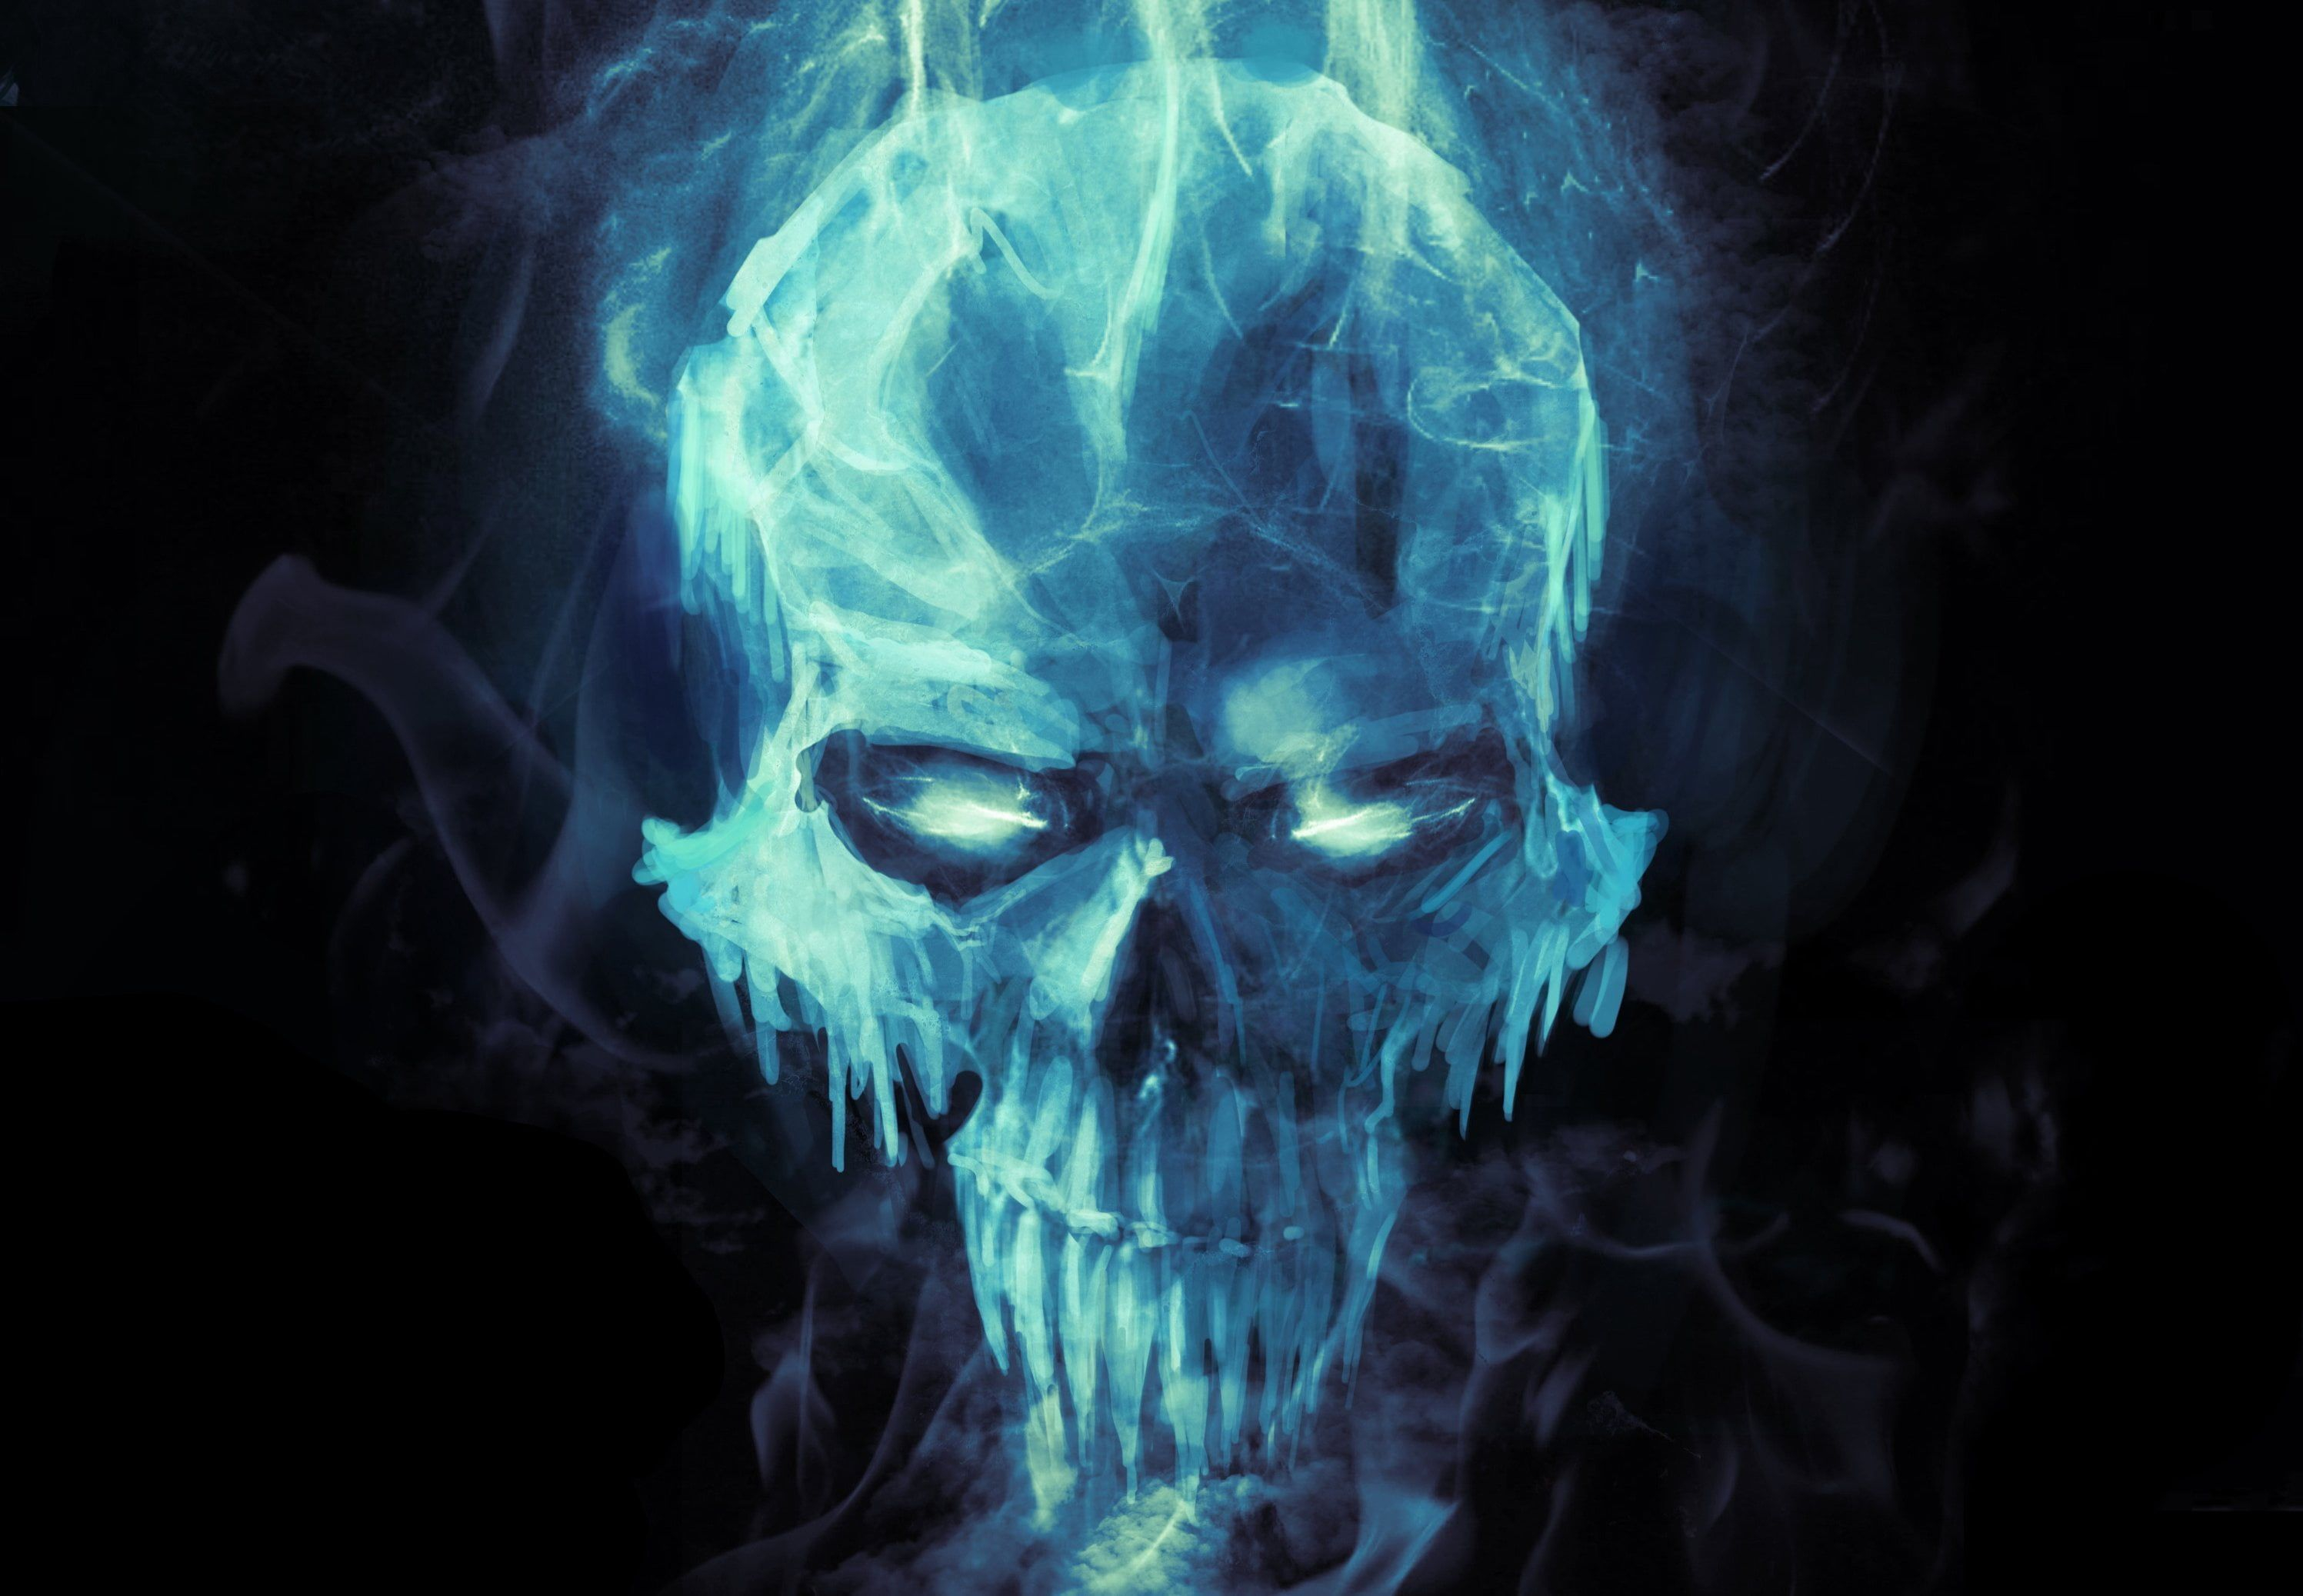 2994x2075 blue skull wallpaper #cold #ice #fiction #skull #icicles #art black background #2K #wallpaper #hdwallpaper #desktop | Skull wallpaper, Skull art, Blue skulls